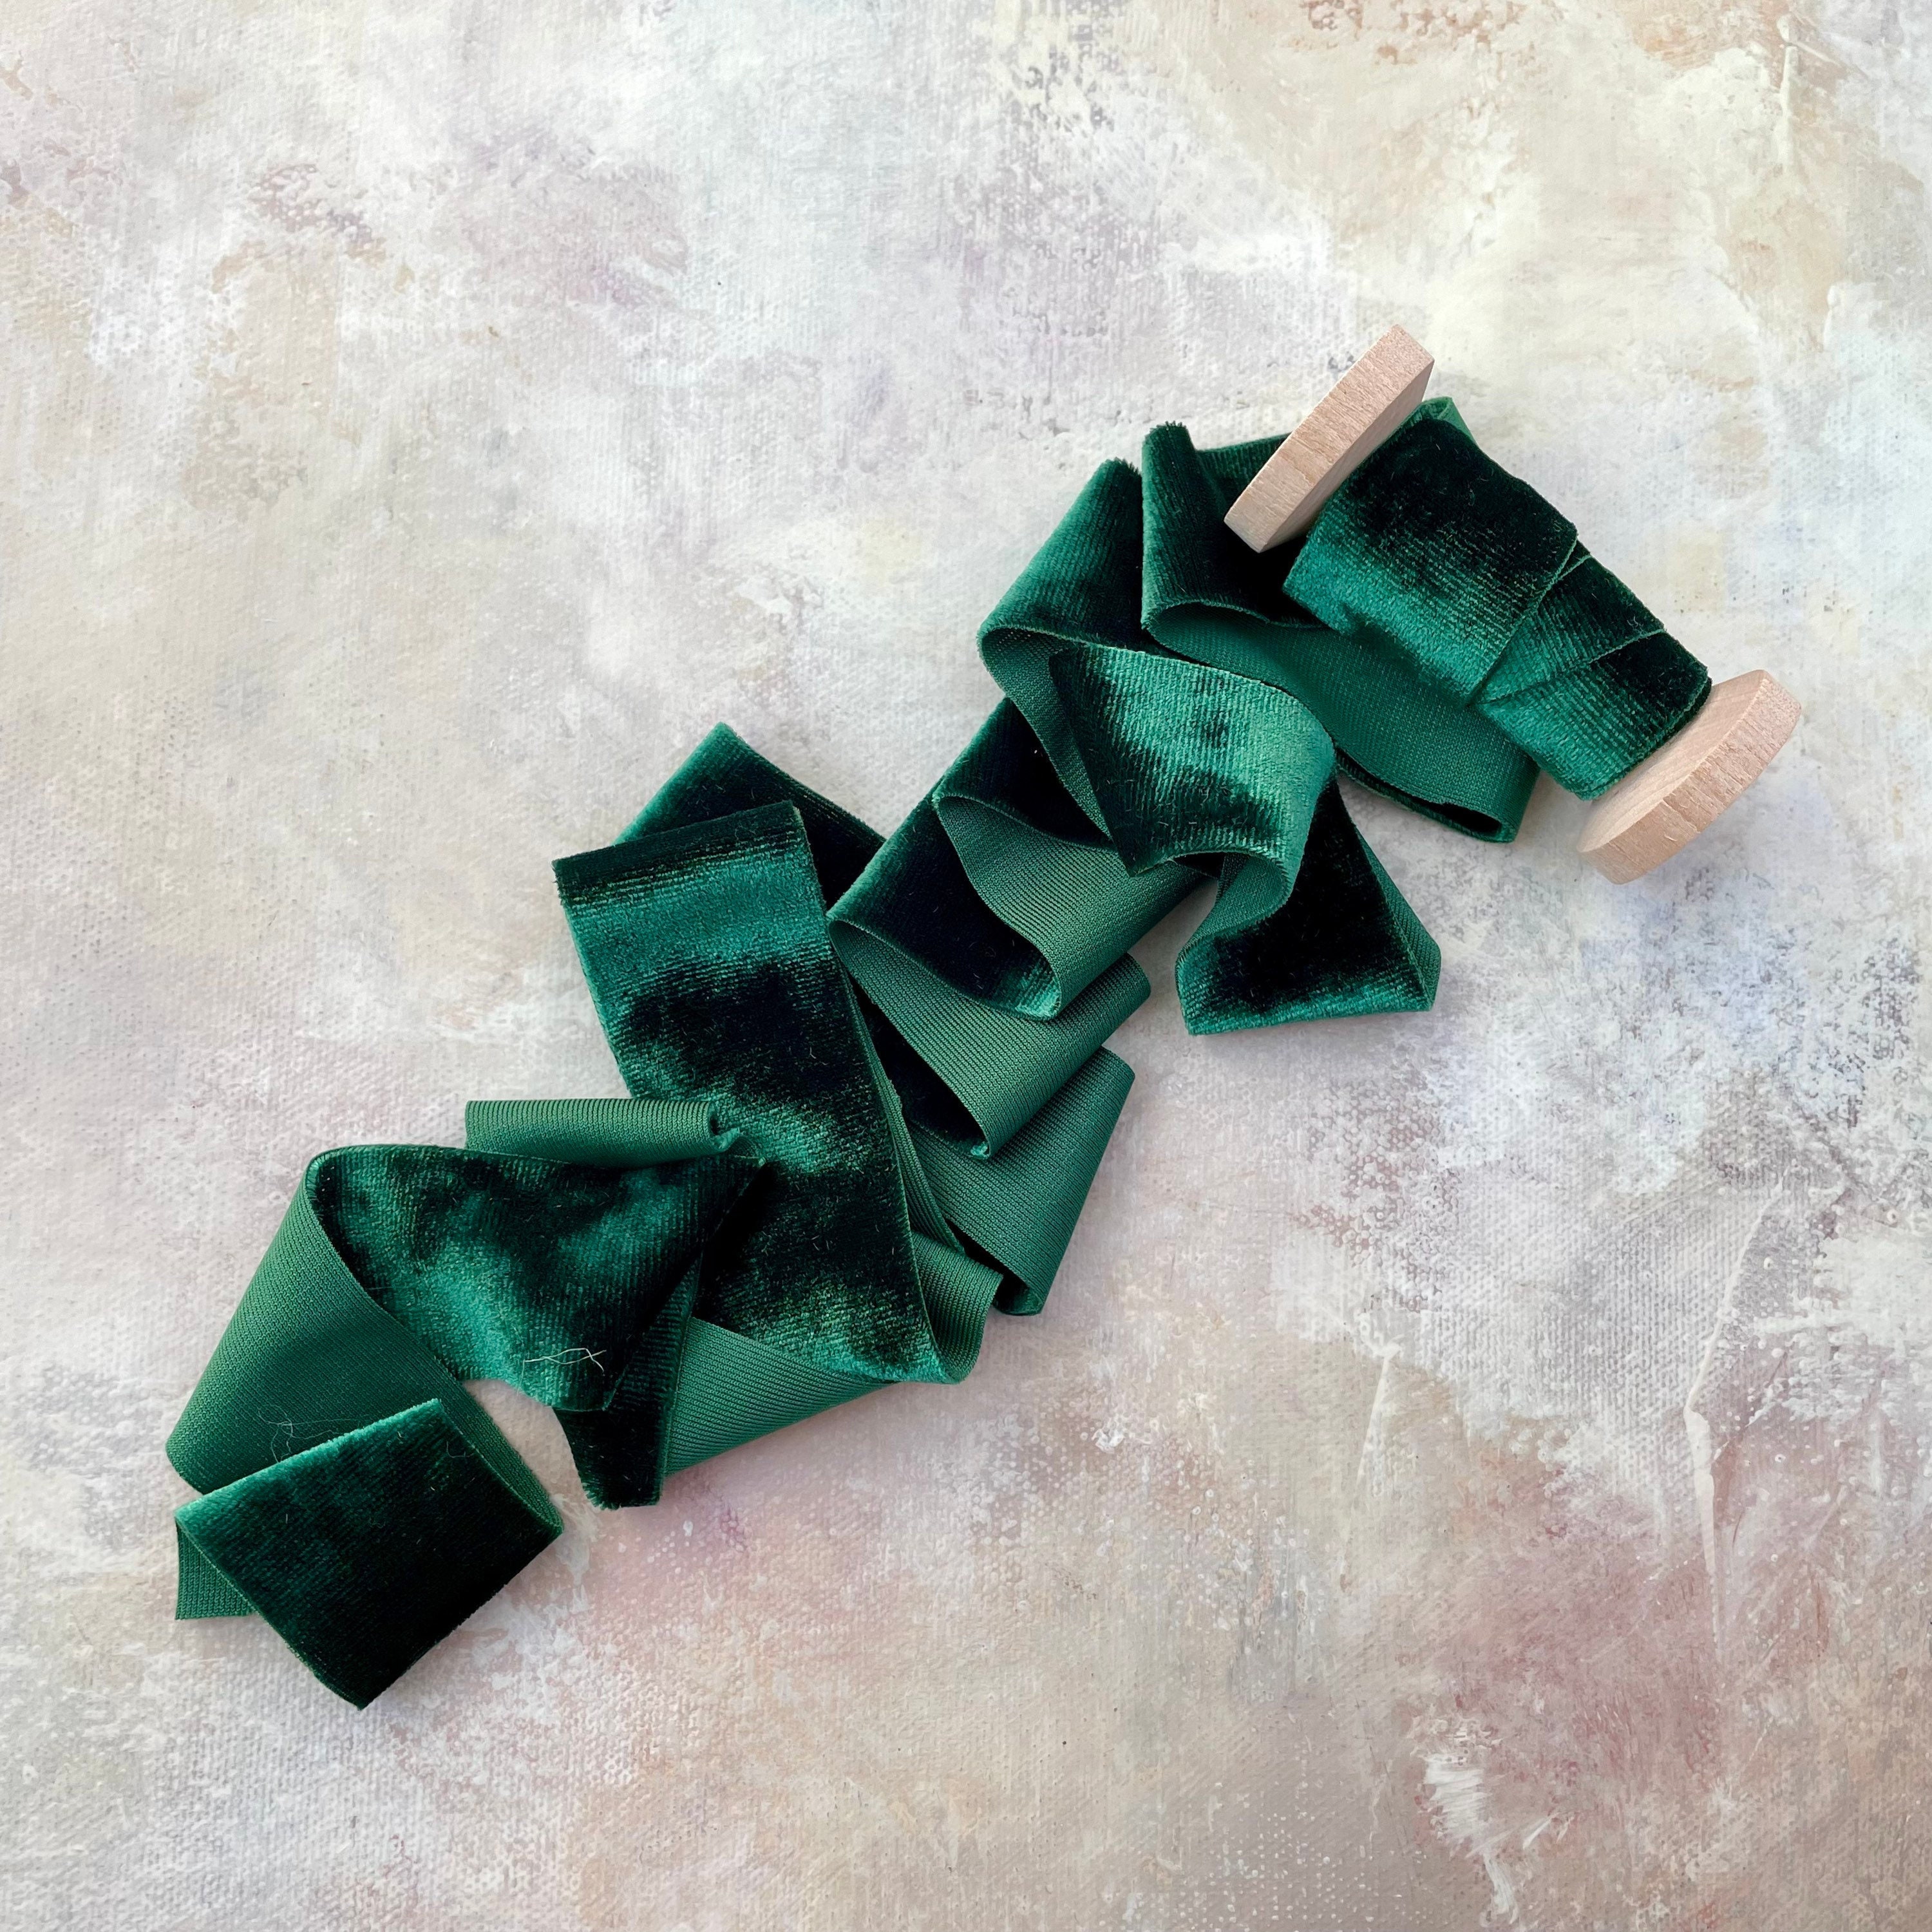 GetUSCart- LEEQE Double Face Emerald Green Satin Ribbon 2 inch X